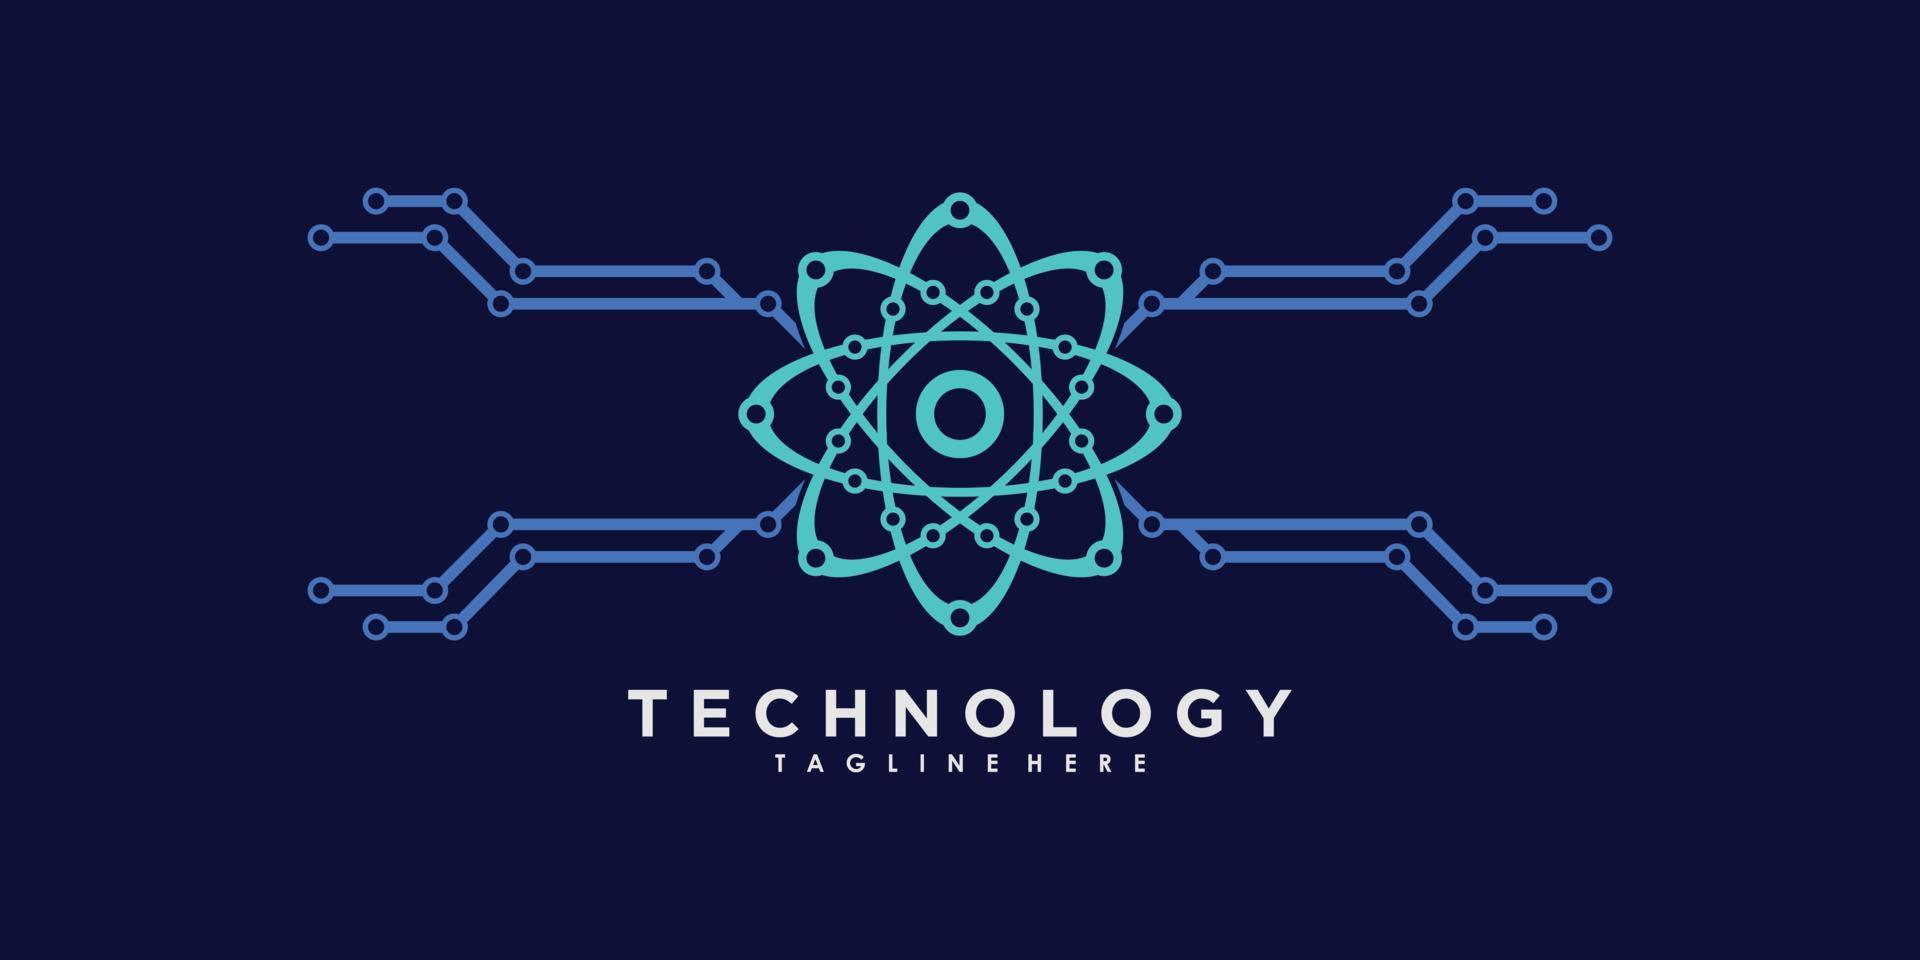 vetor de design de logotipo de tecnologia com conceito criativo abstrato gradiente